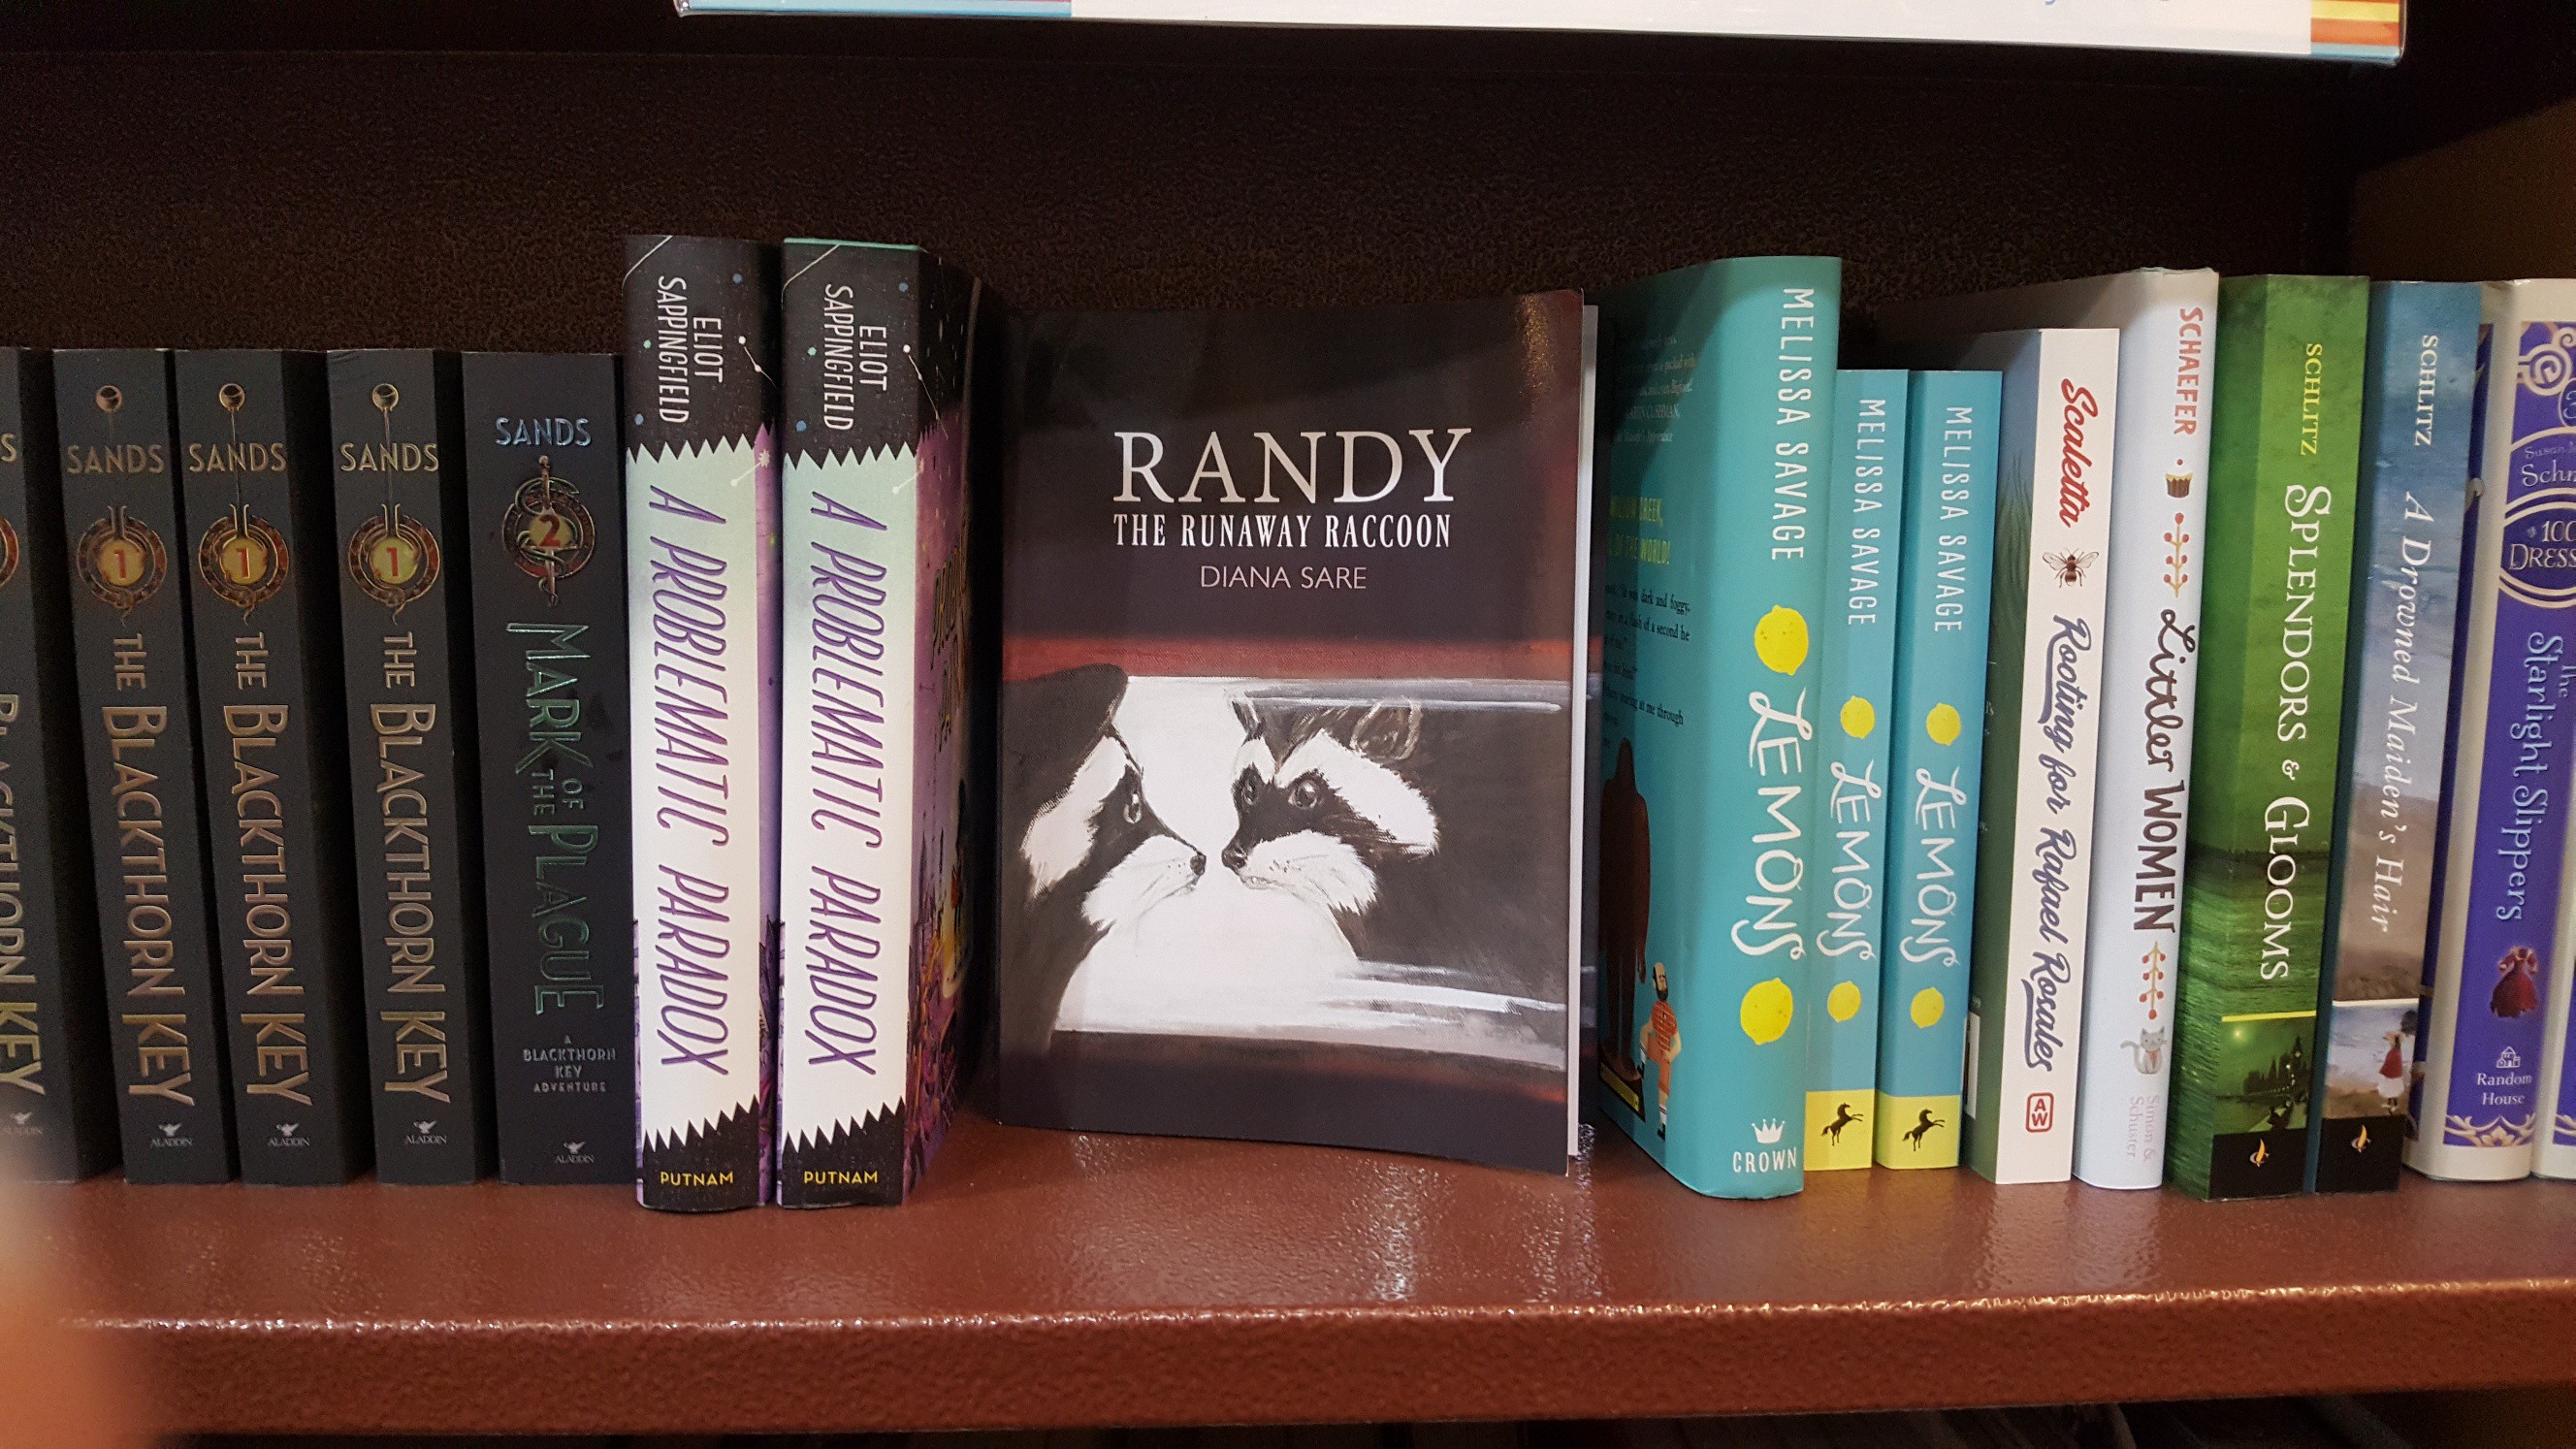 ‘Randy The Runaway Raccoon’ was Found at Chapters Indigo’s Shelf